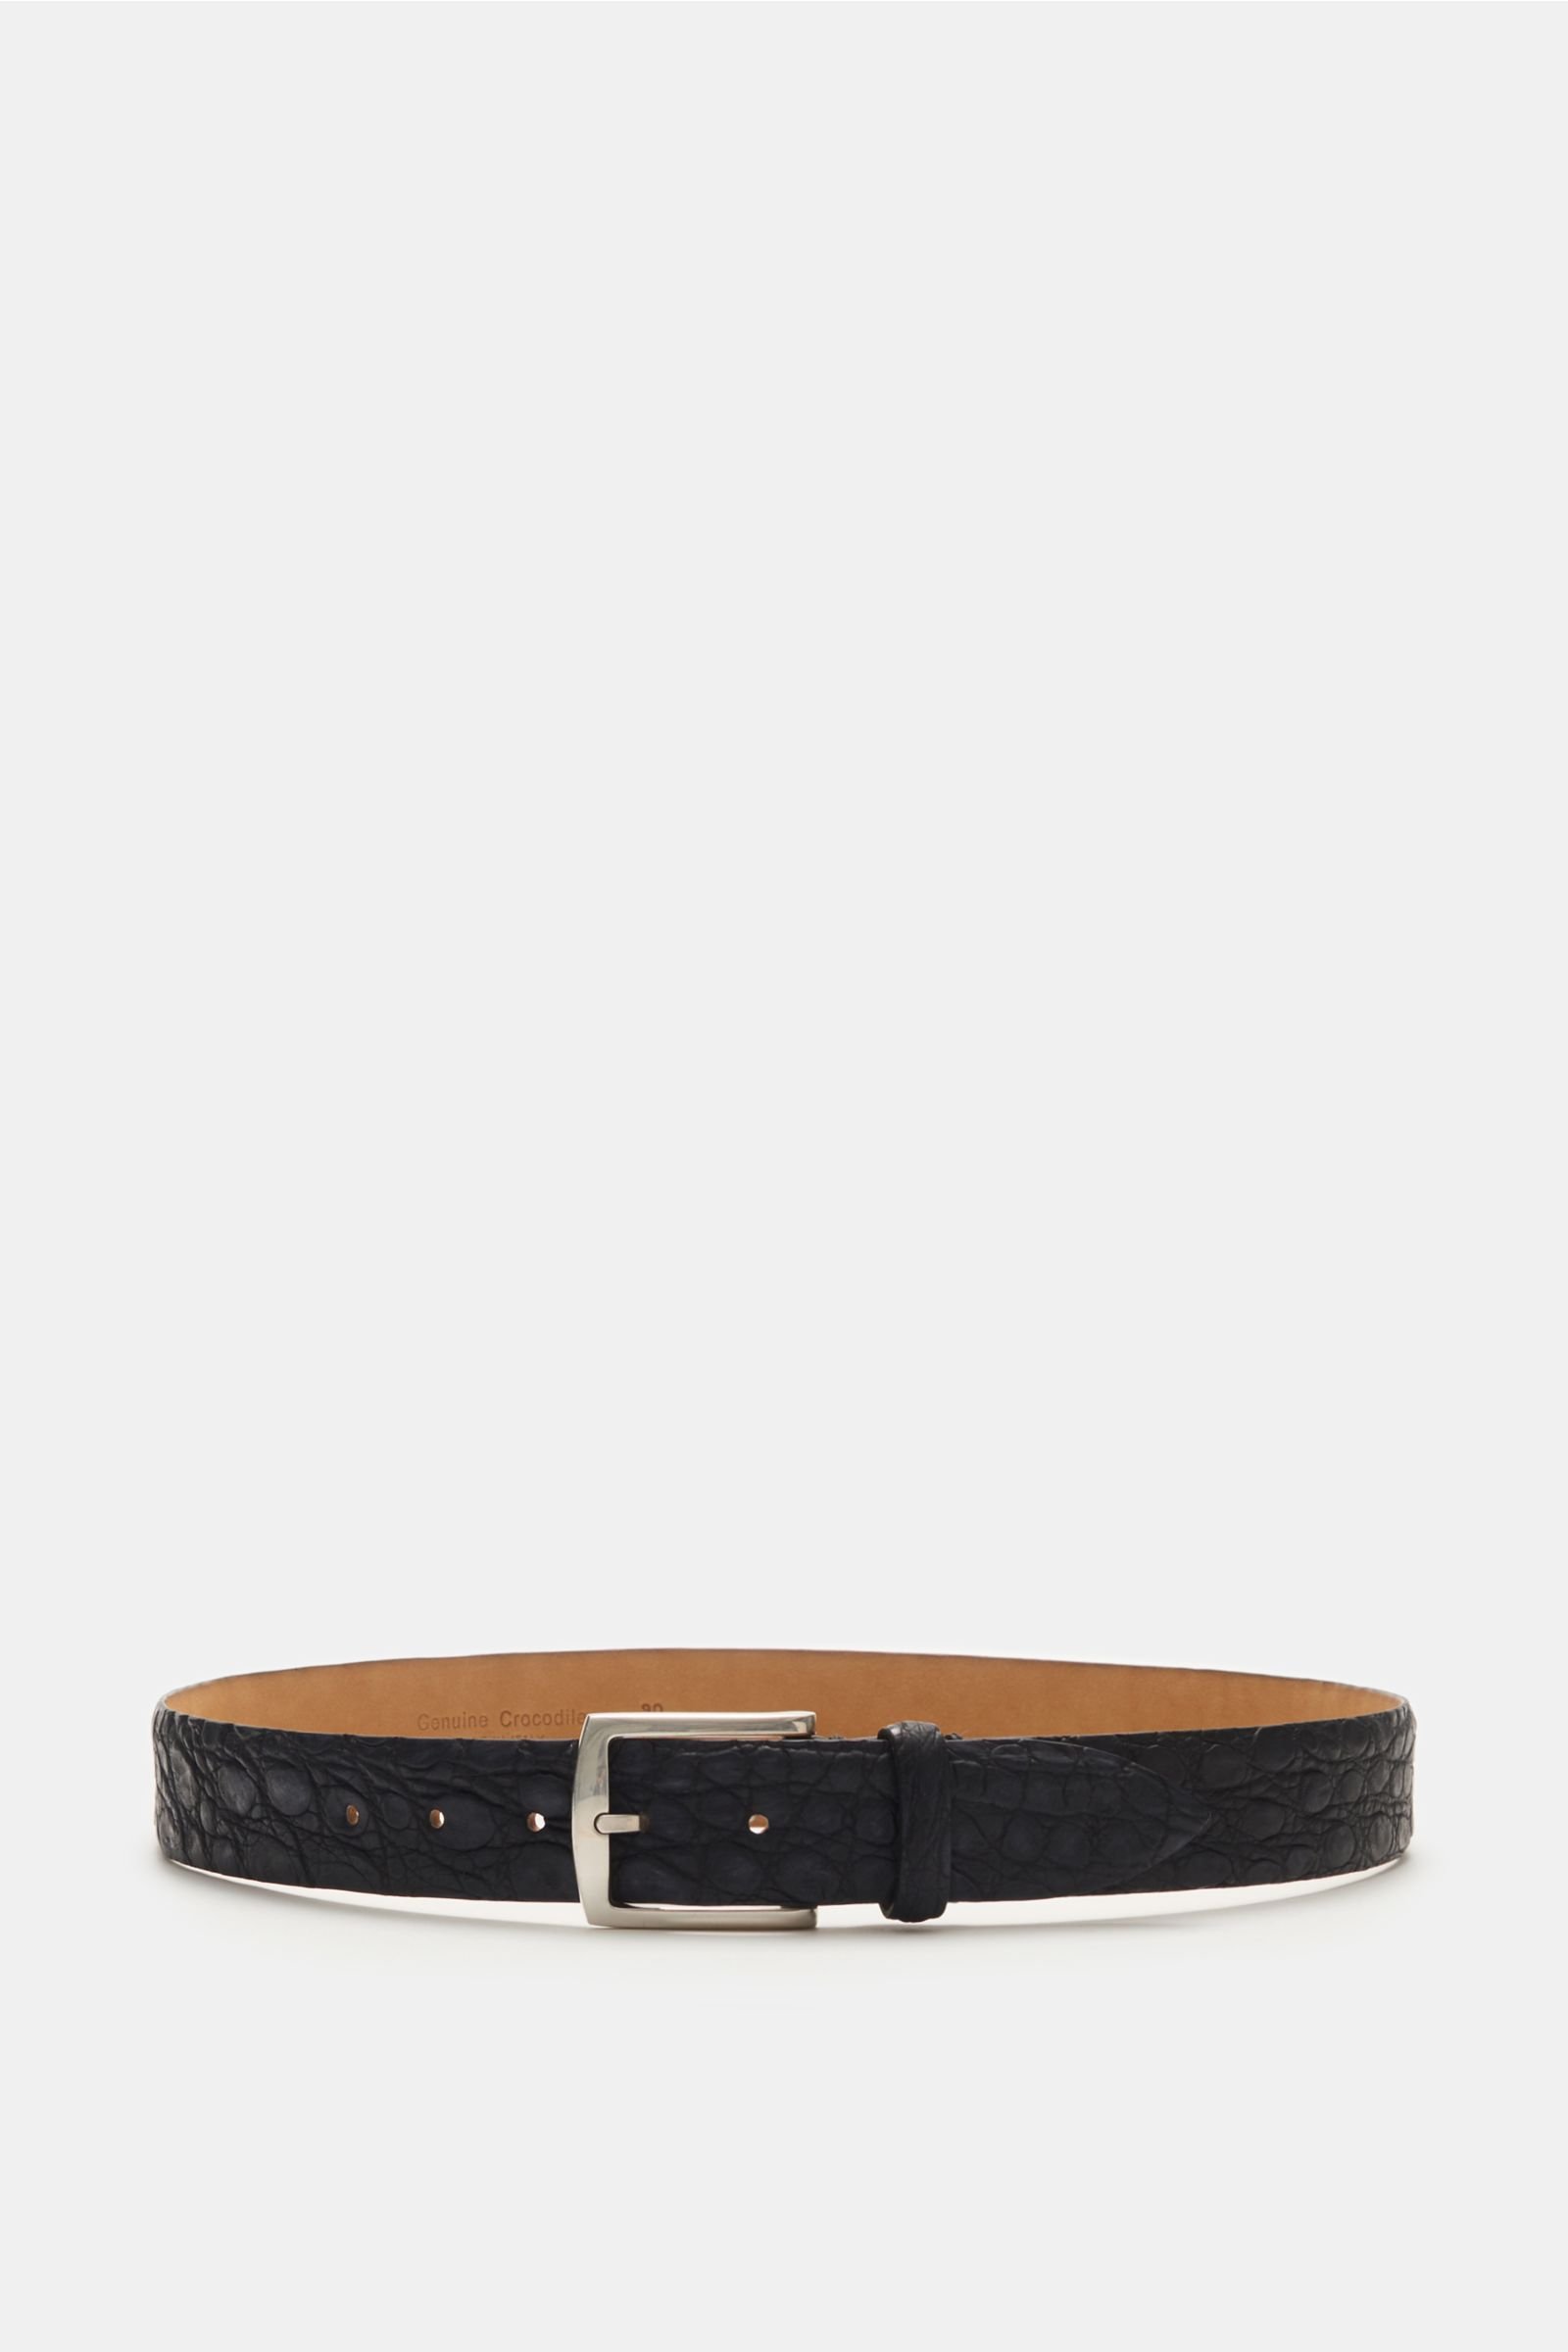 Crocodile leather belt black